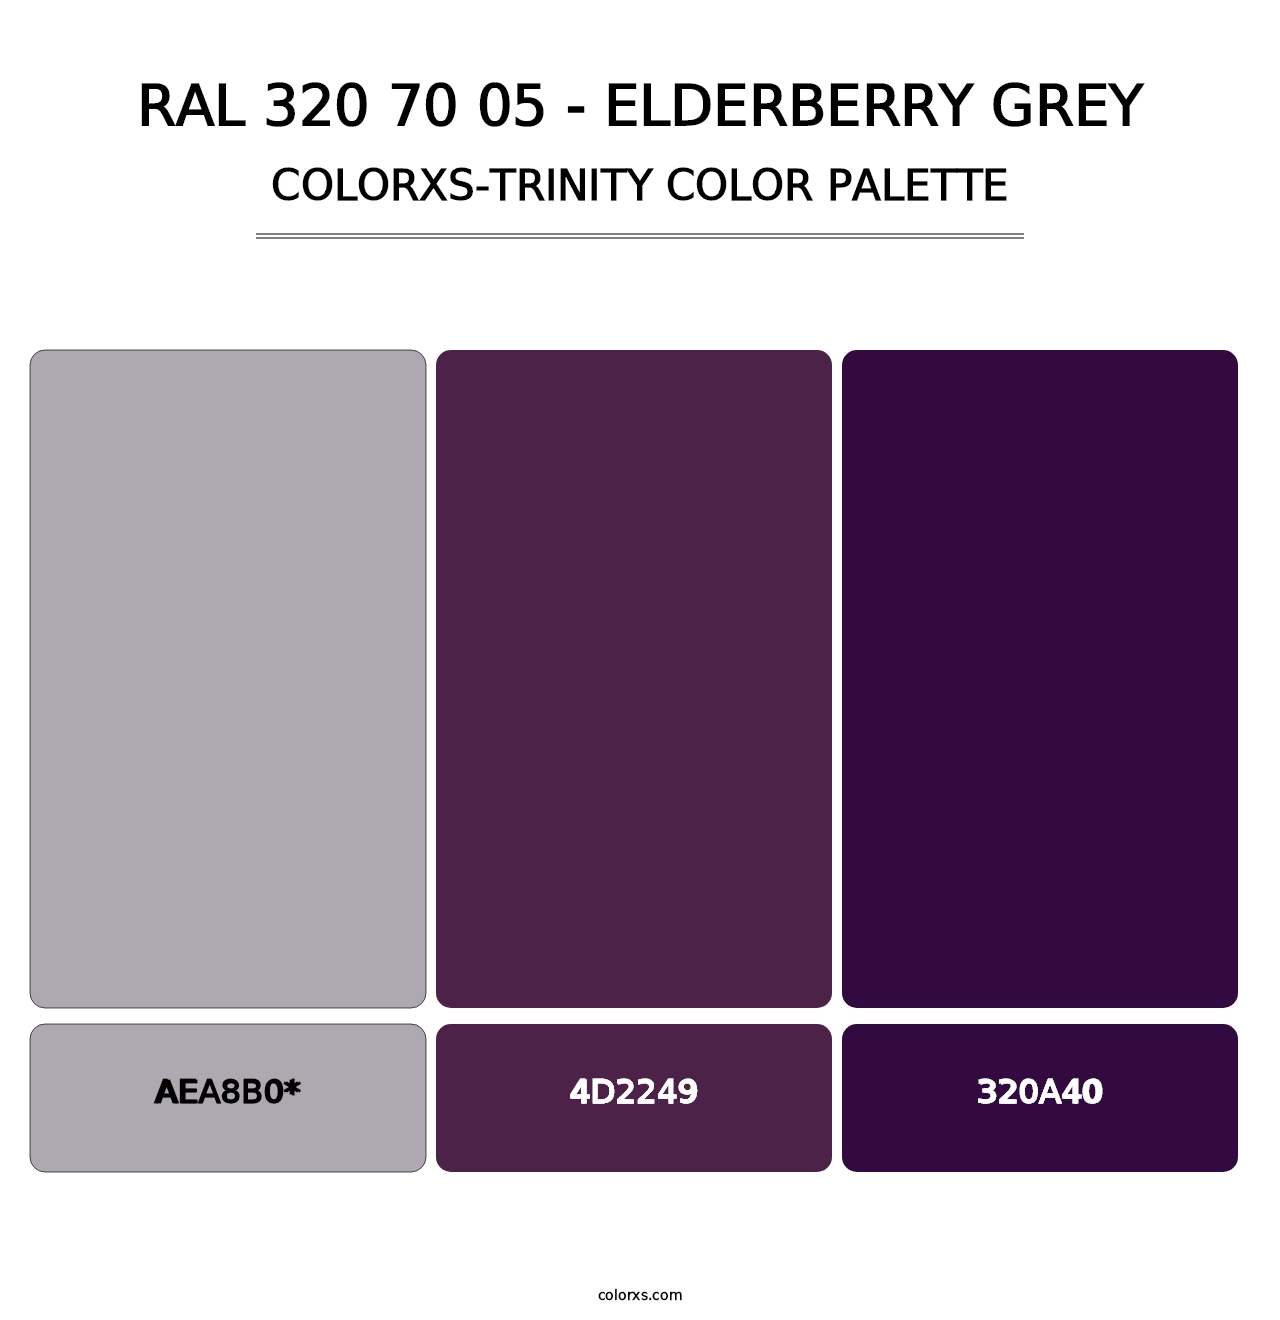 RAL 320 70 05 - Elderberry Grey - Colorxs Trinity Palette